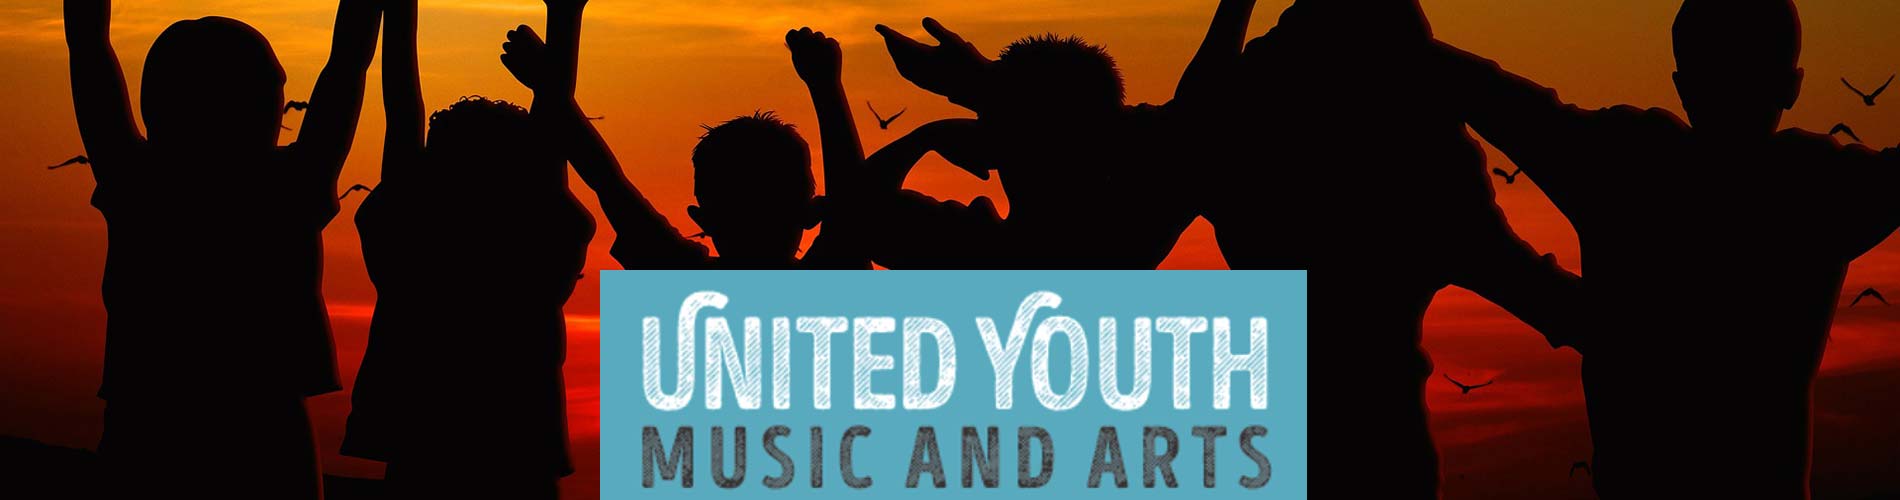 United Youth Music and Arts (UYMA)